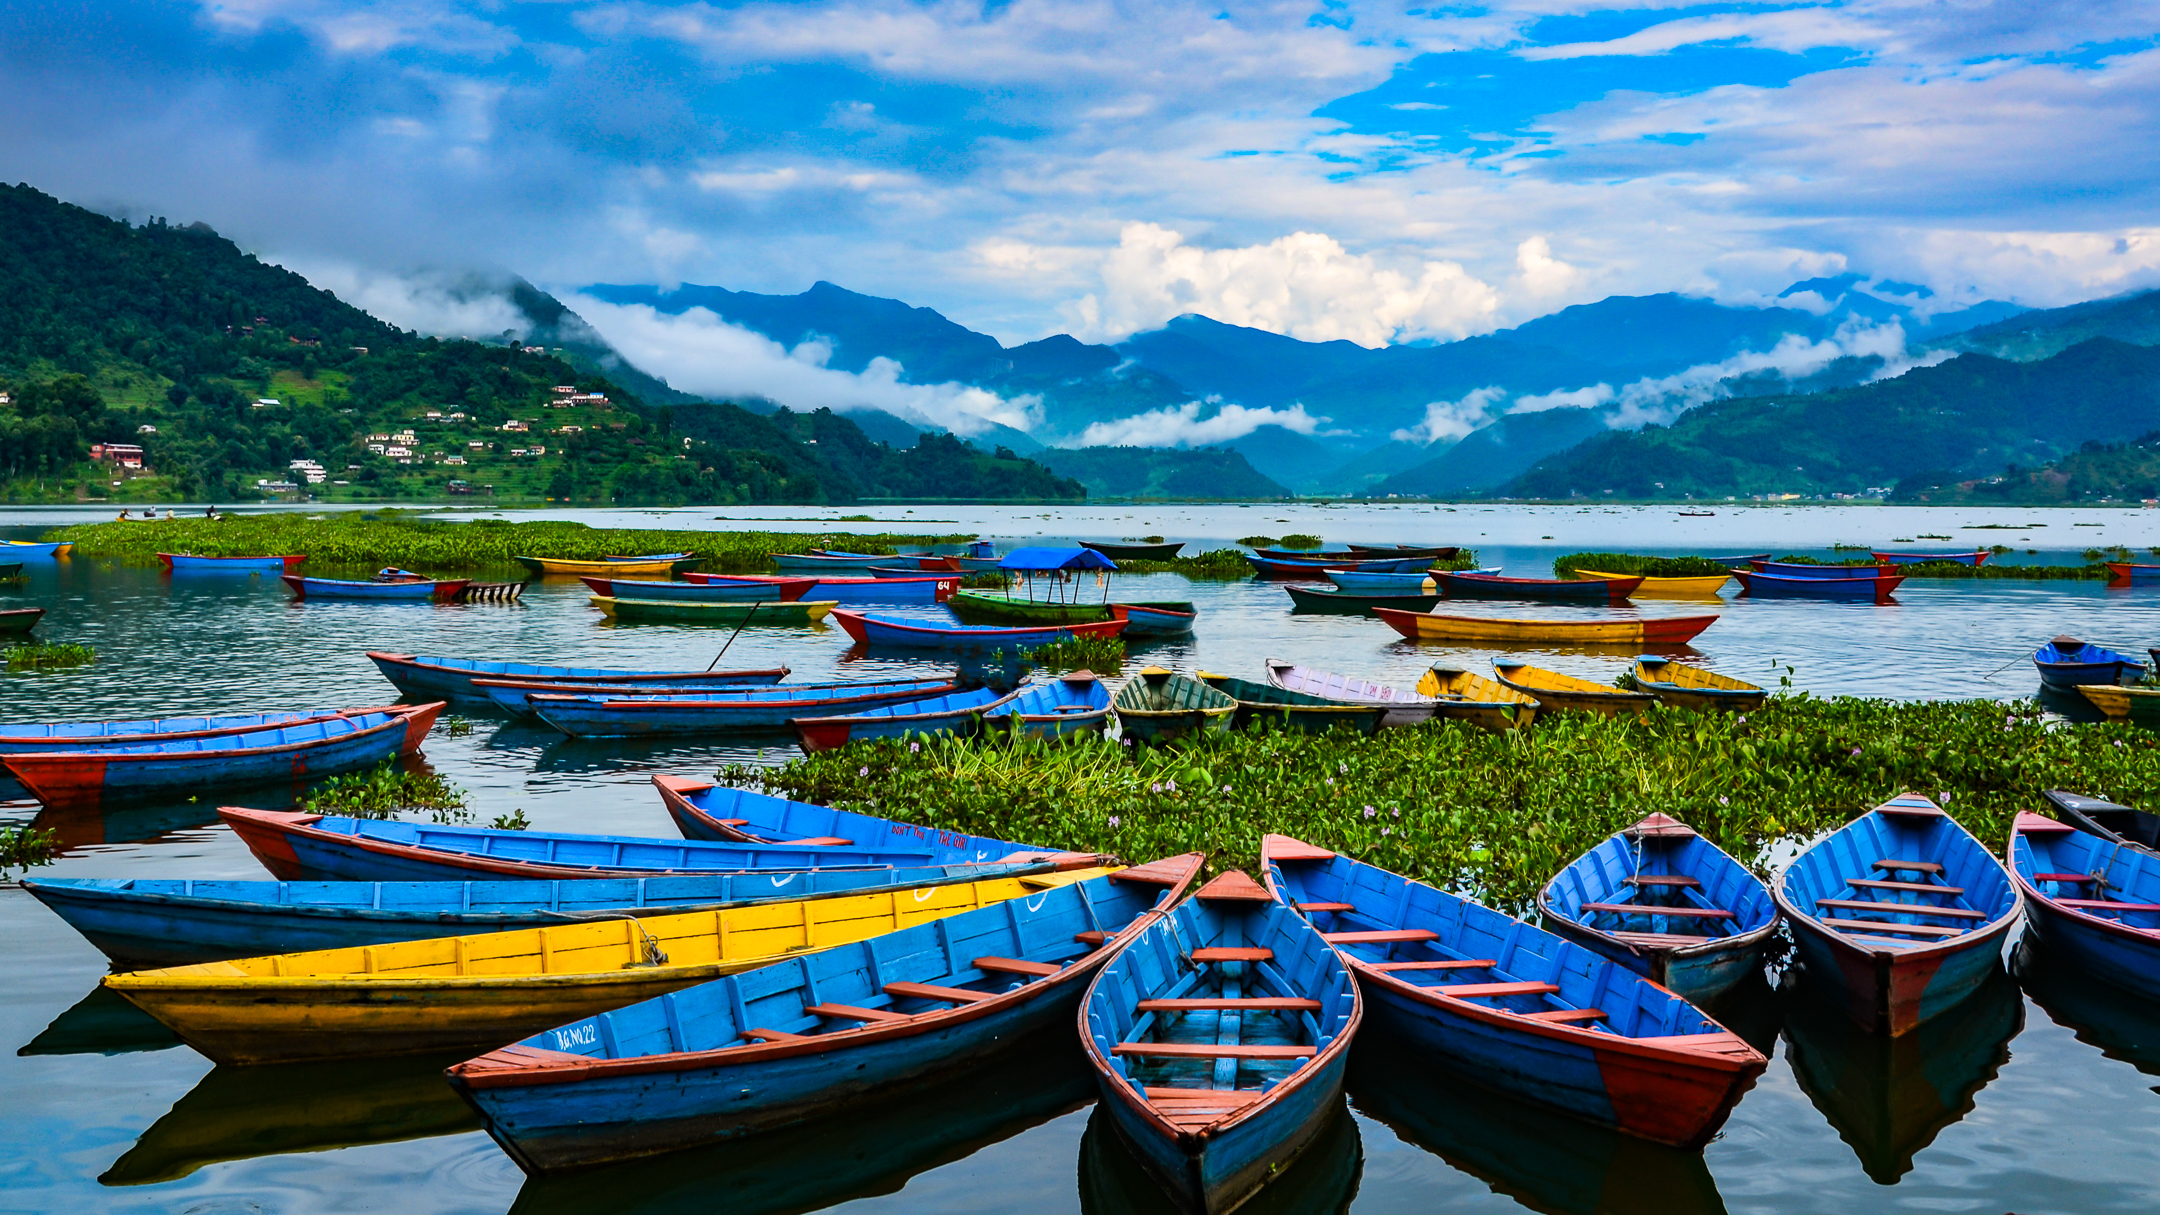 Colorful row boats docked on Lake Phewa in Pokhara, Nepal.